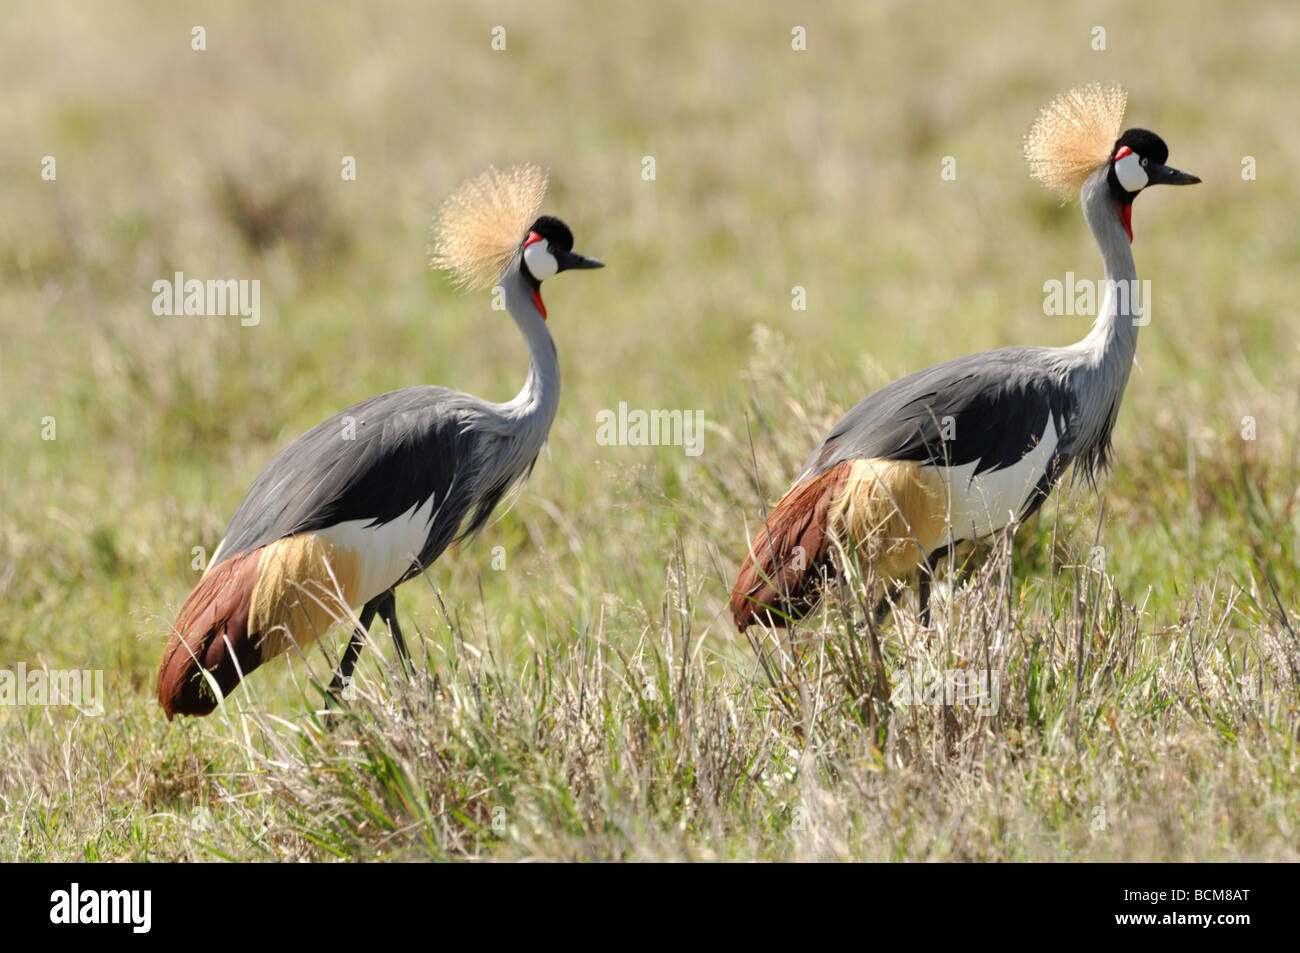 Stock photo of a gray-crowned crane walking across the grassland, Ngorongoro Crater, Tanzania, 2009. Stock Photo